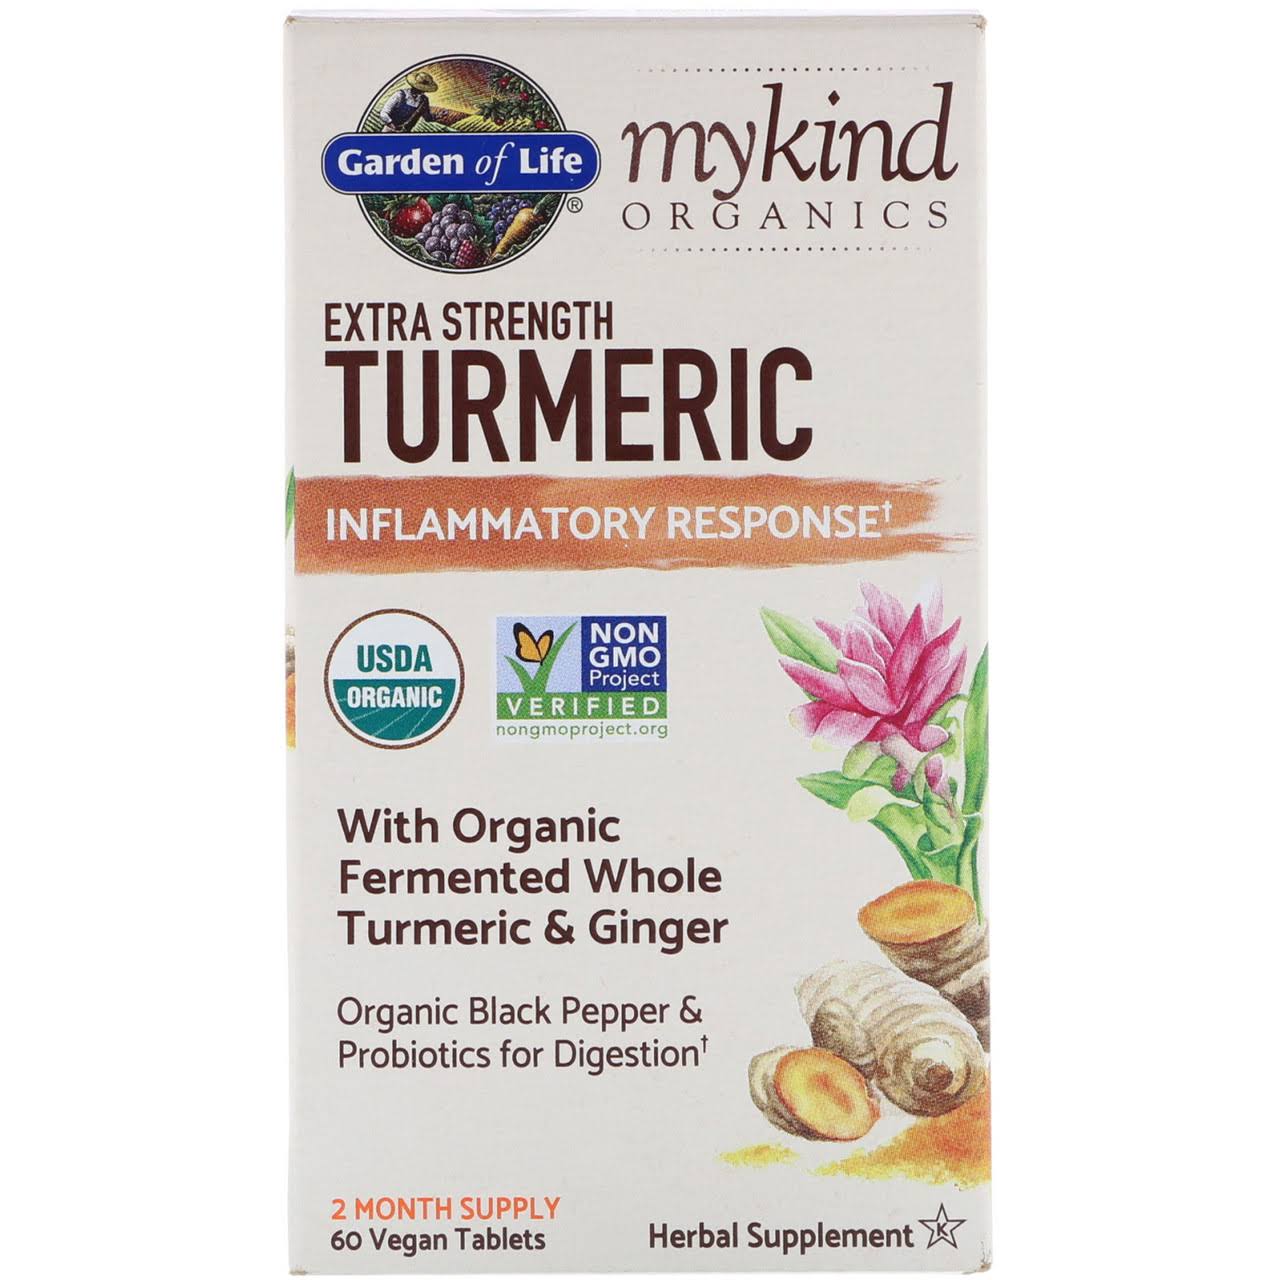 Garden of Life MyKind Organics Extra Strength Turmeric Inflammatory Response 60 Vegan Tablets